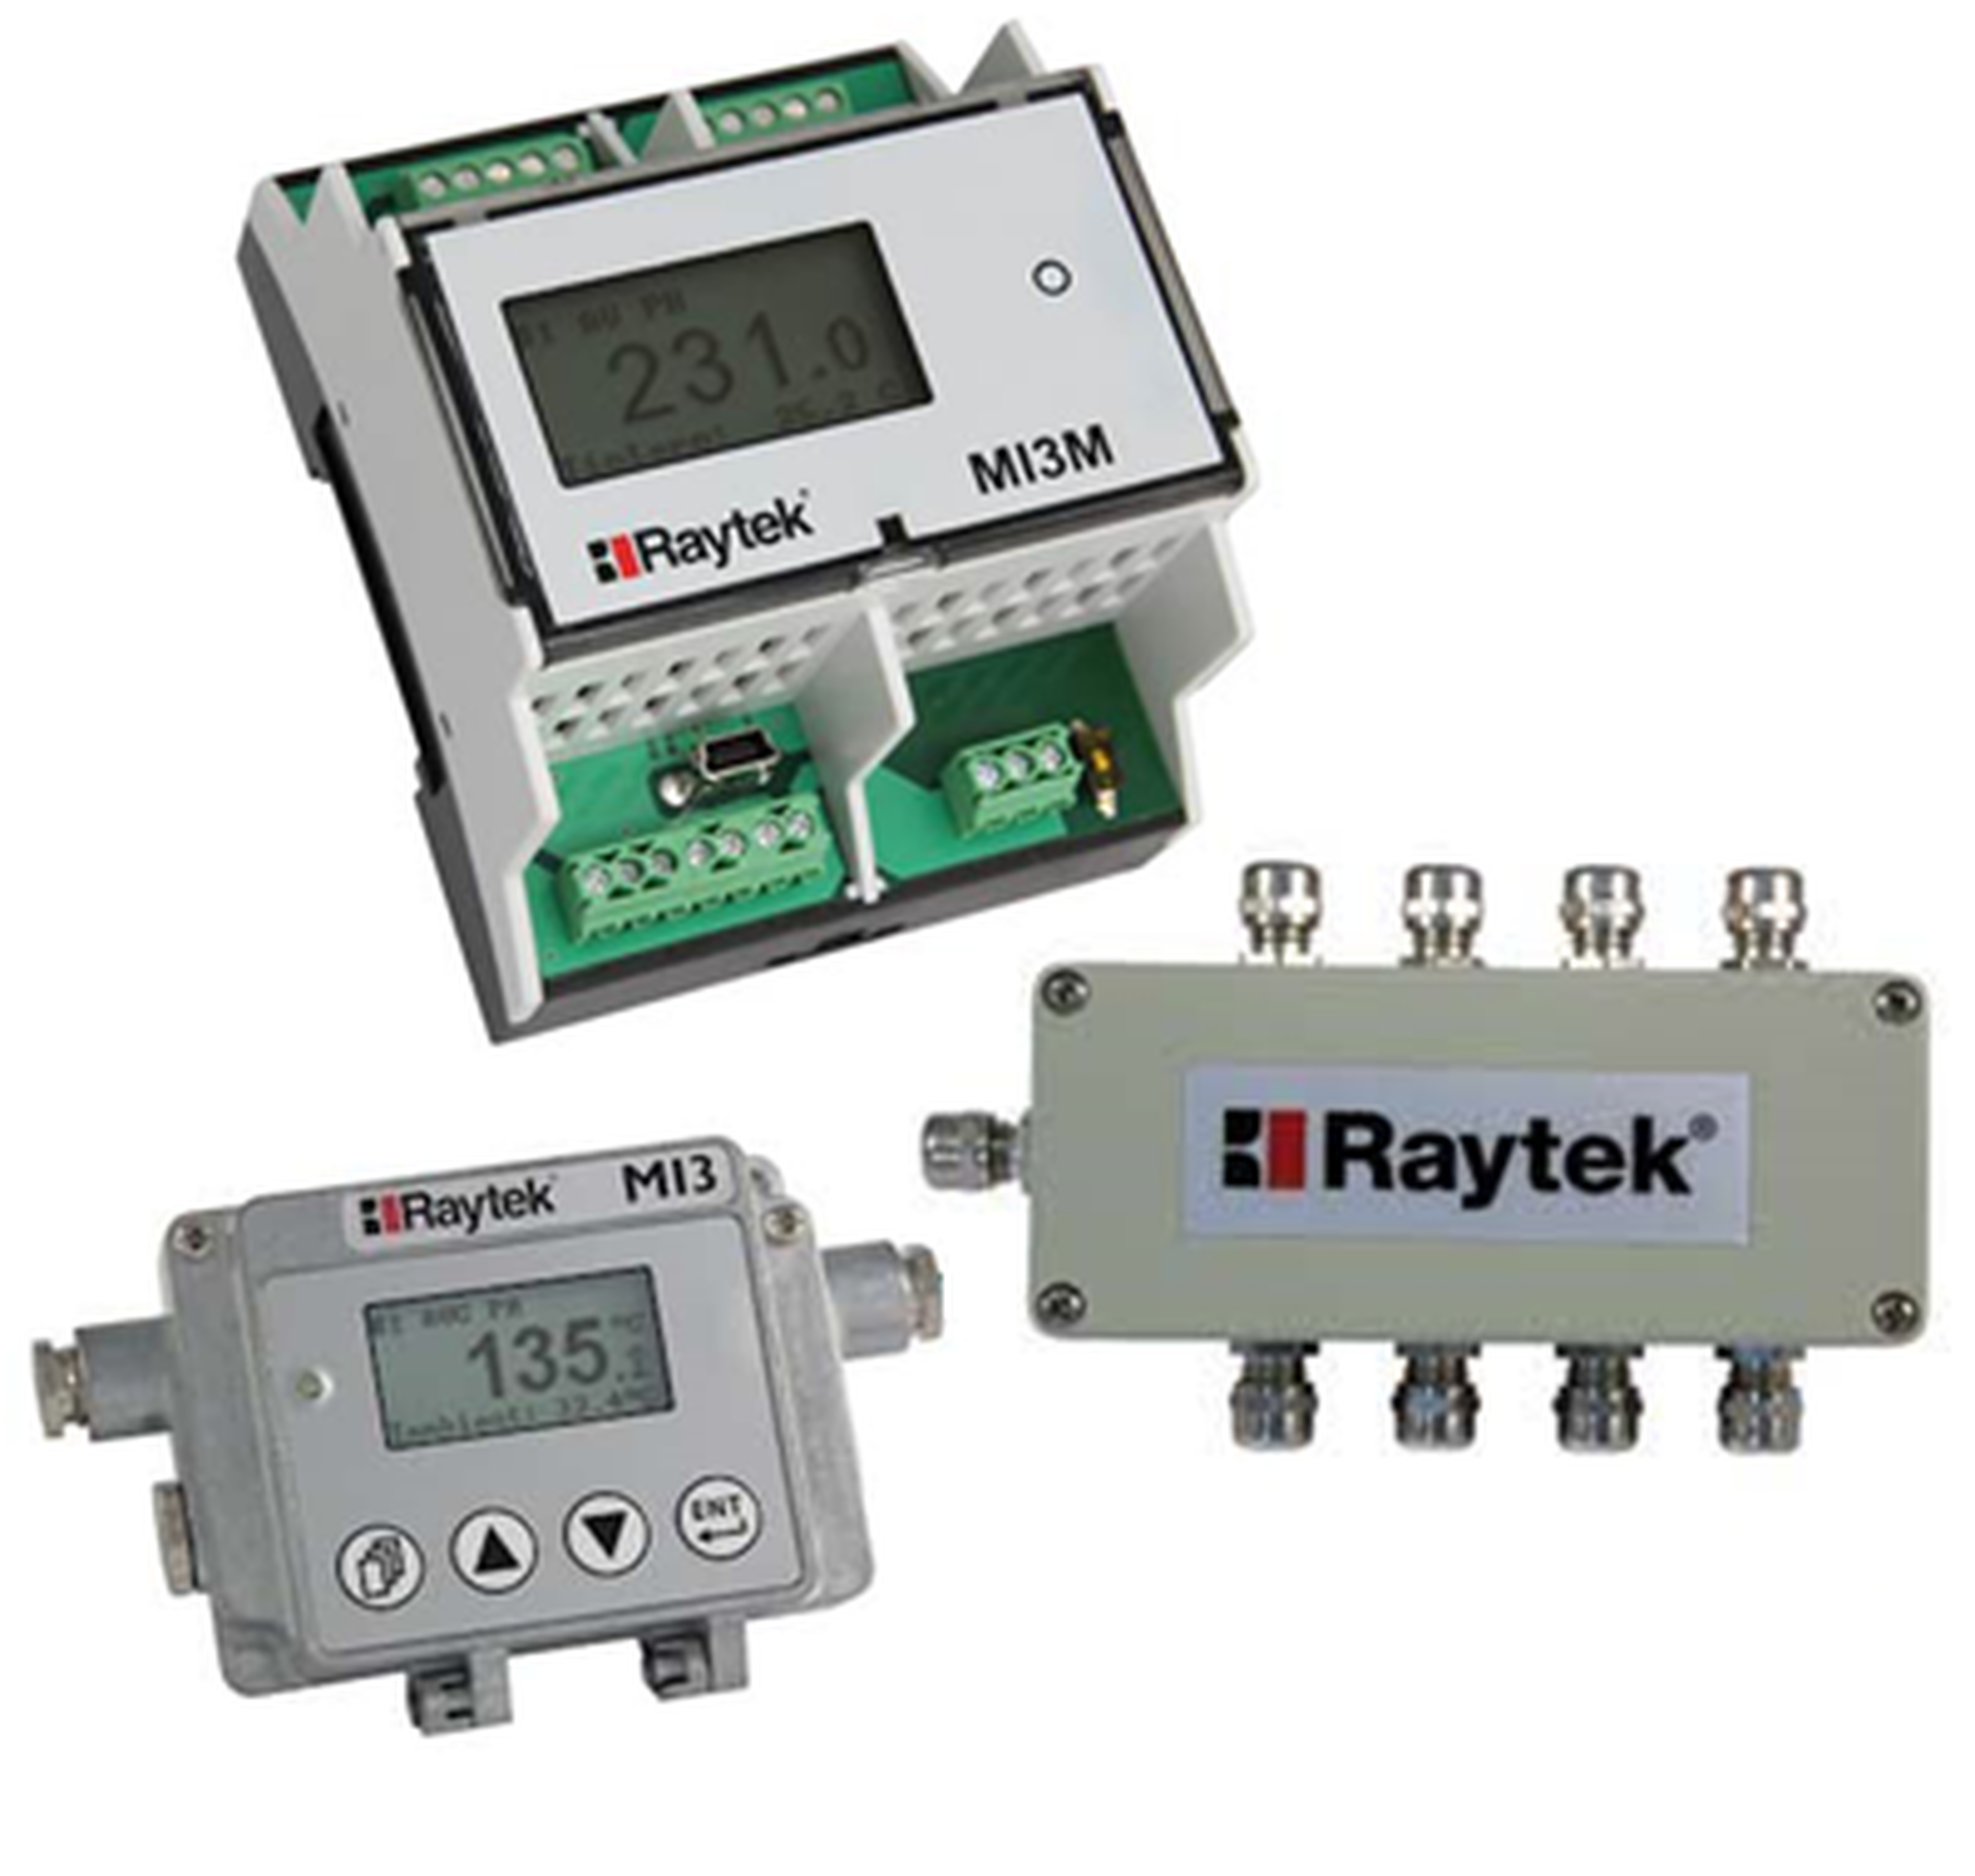 Raytek MI3 Digital Infrared Thermometer